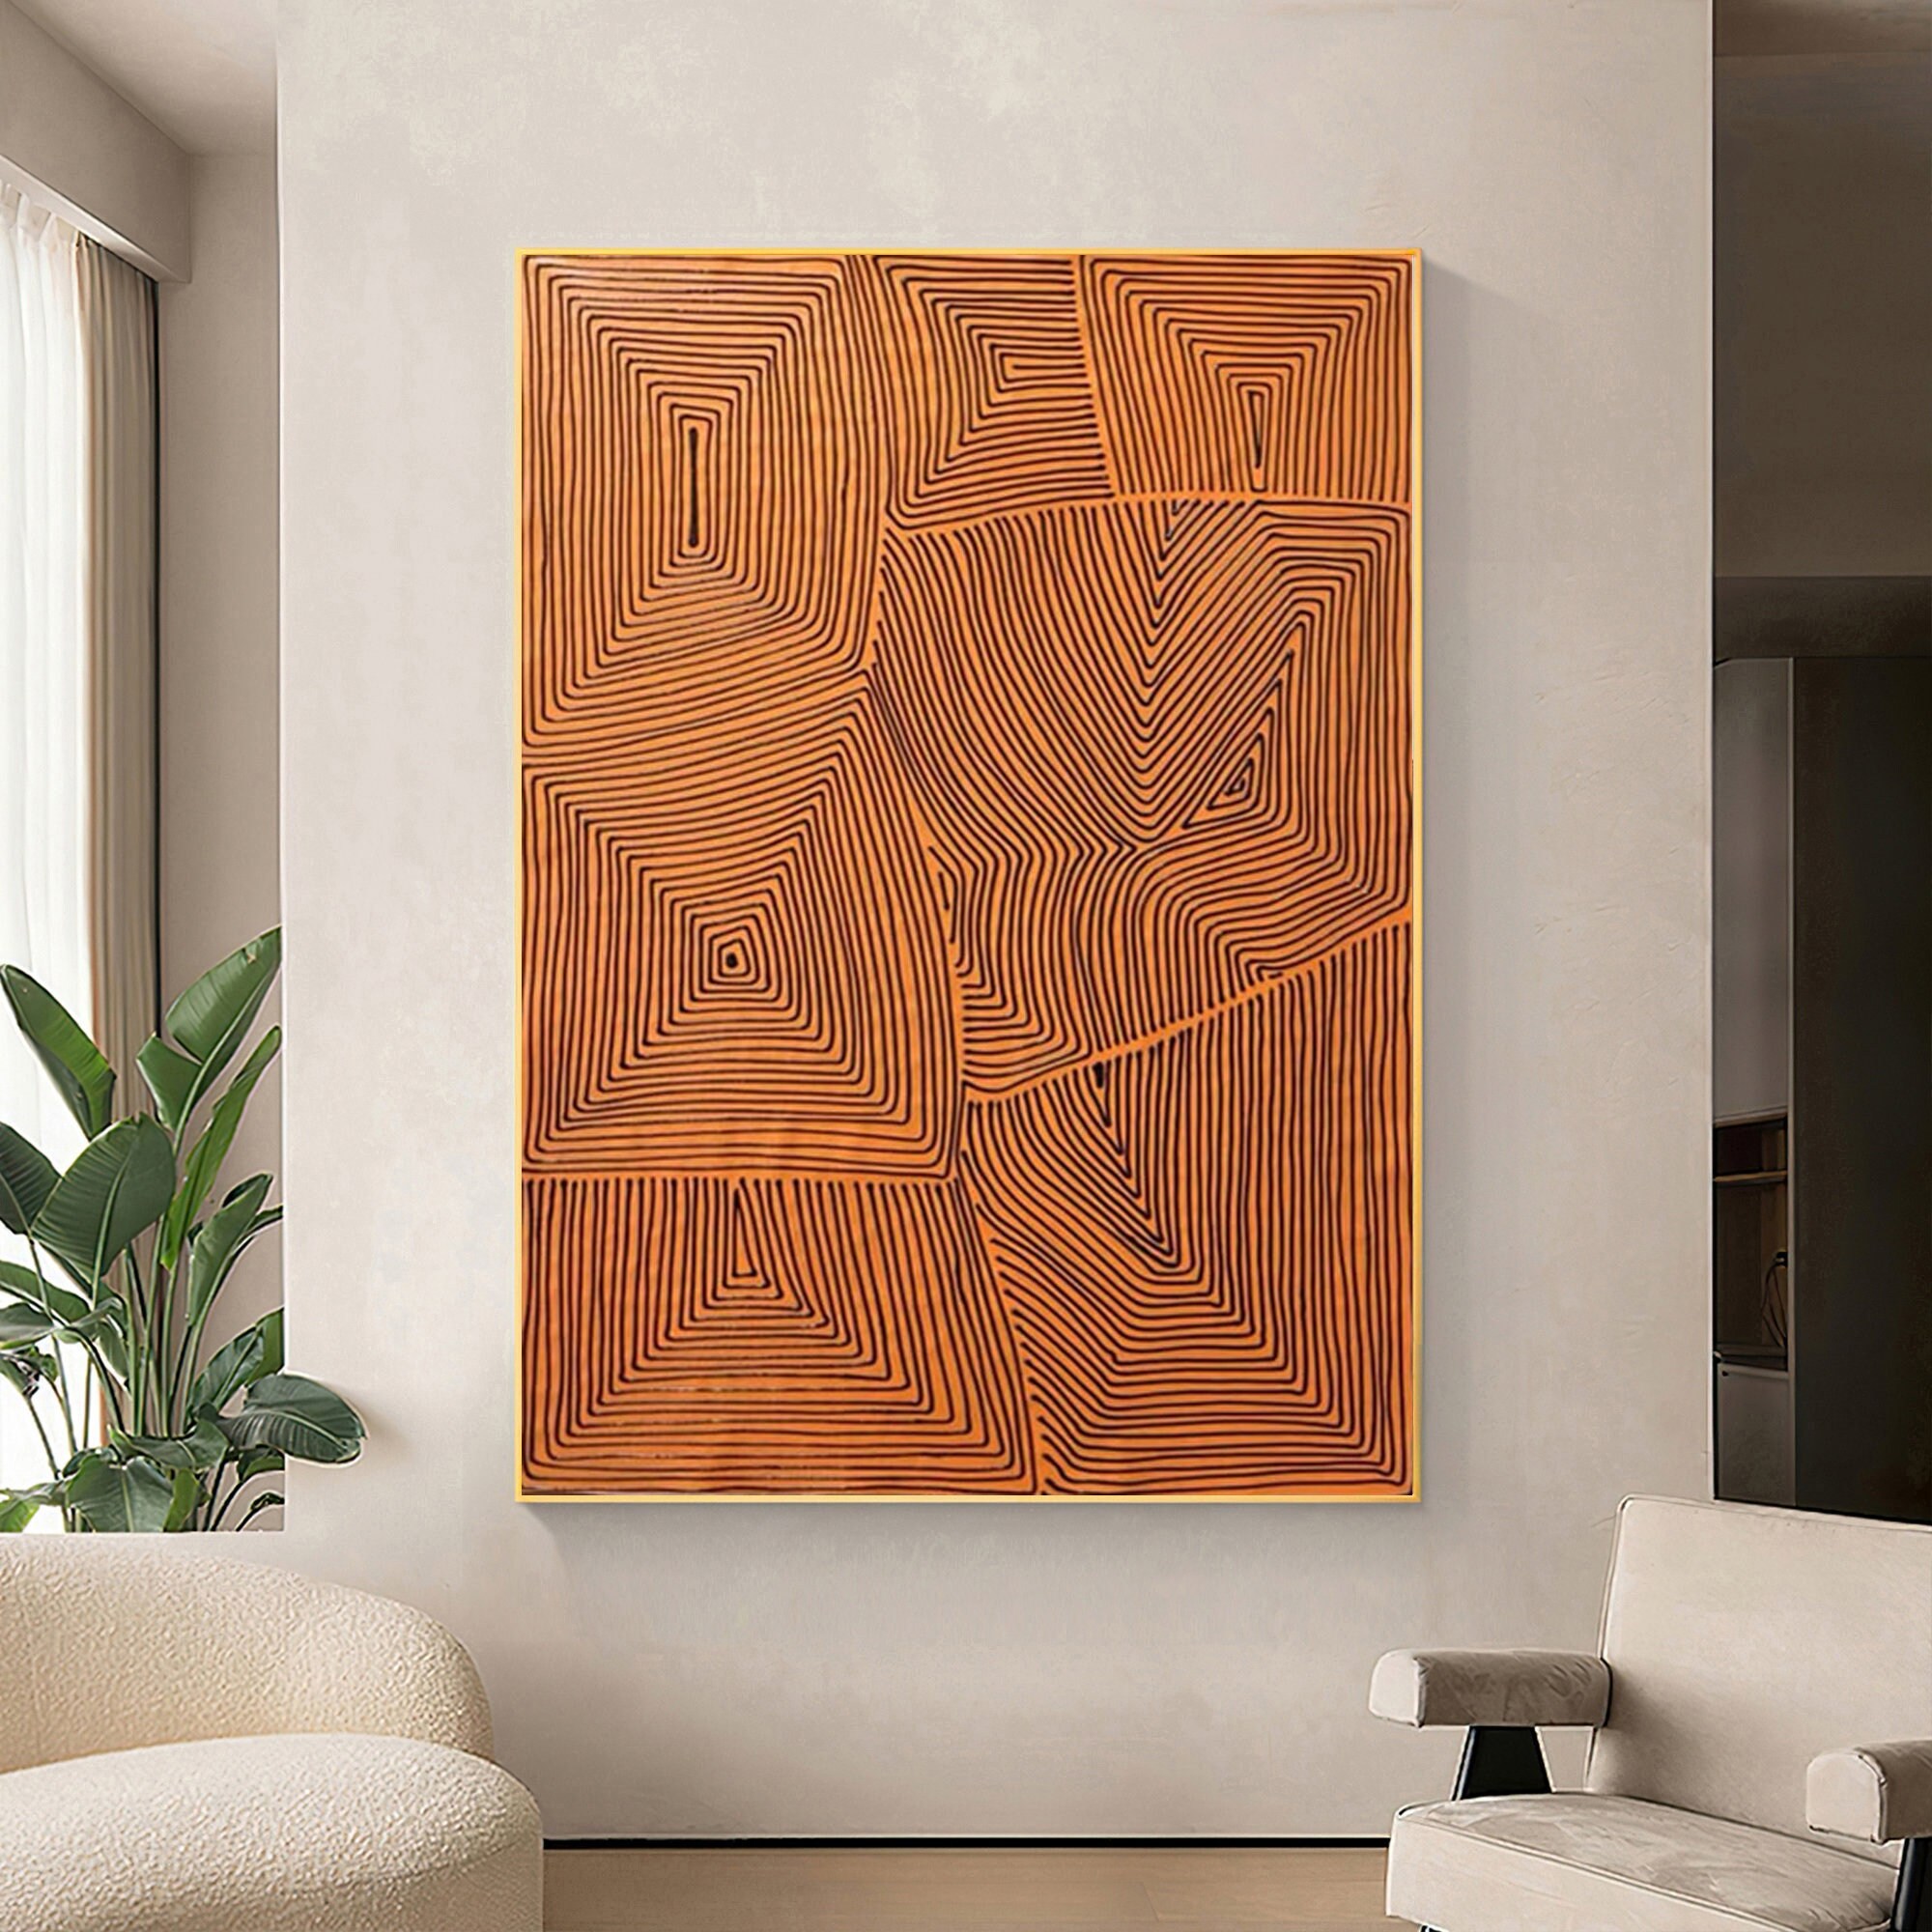 Wabi Sabi – Art of Imperfection. - Contemporary Wood Wall Sculptures